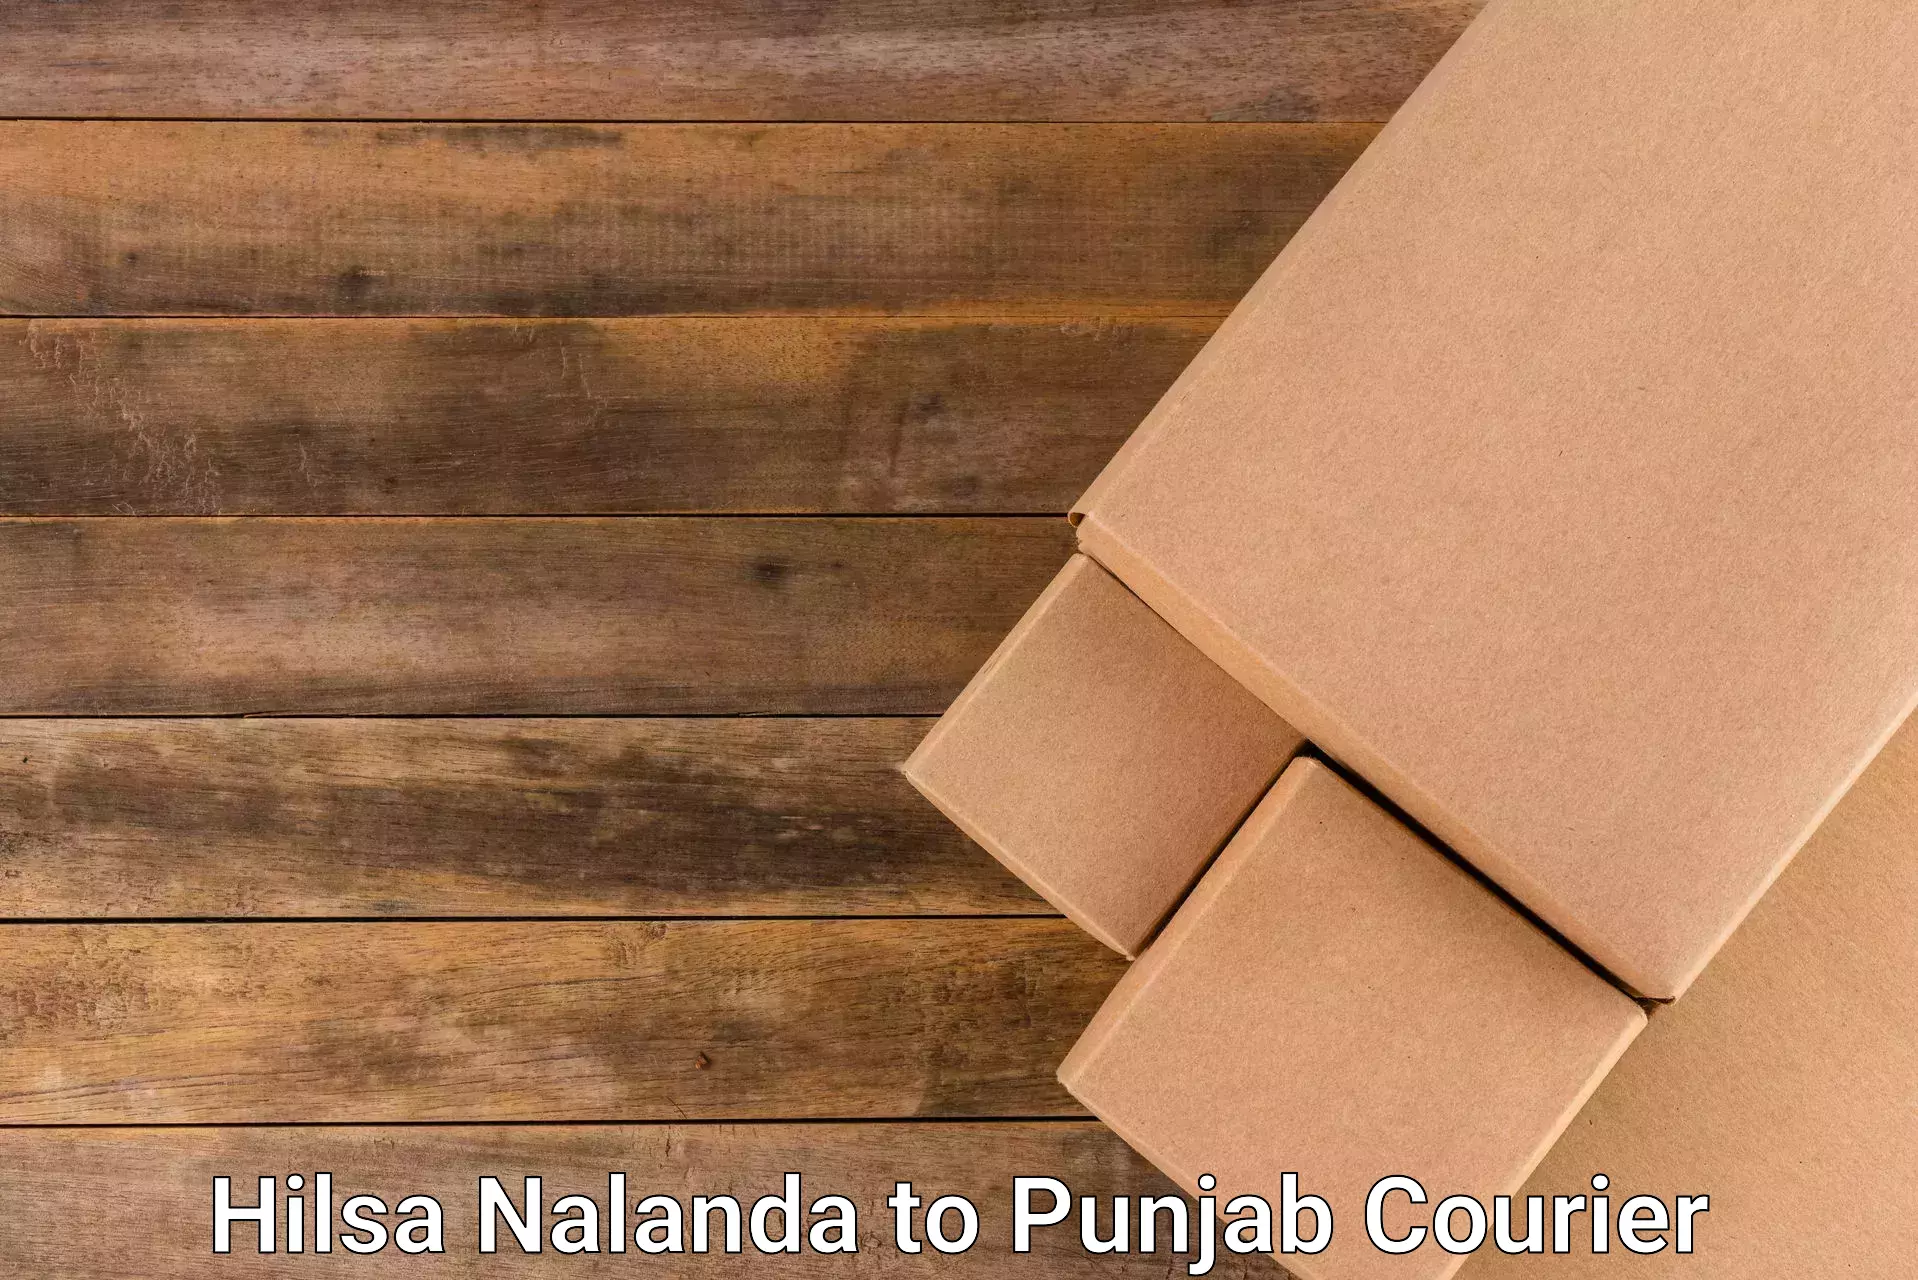 Premium courier solutions Hilsa Nalanda to Punjab